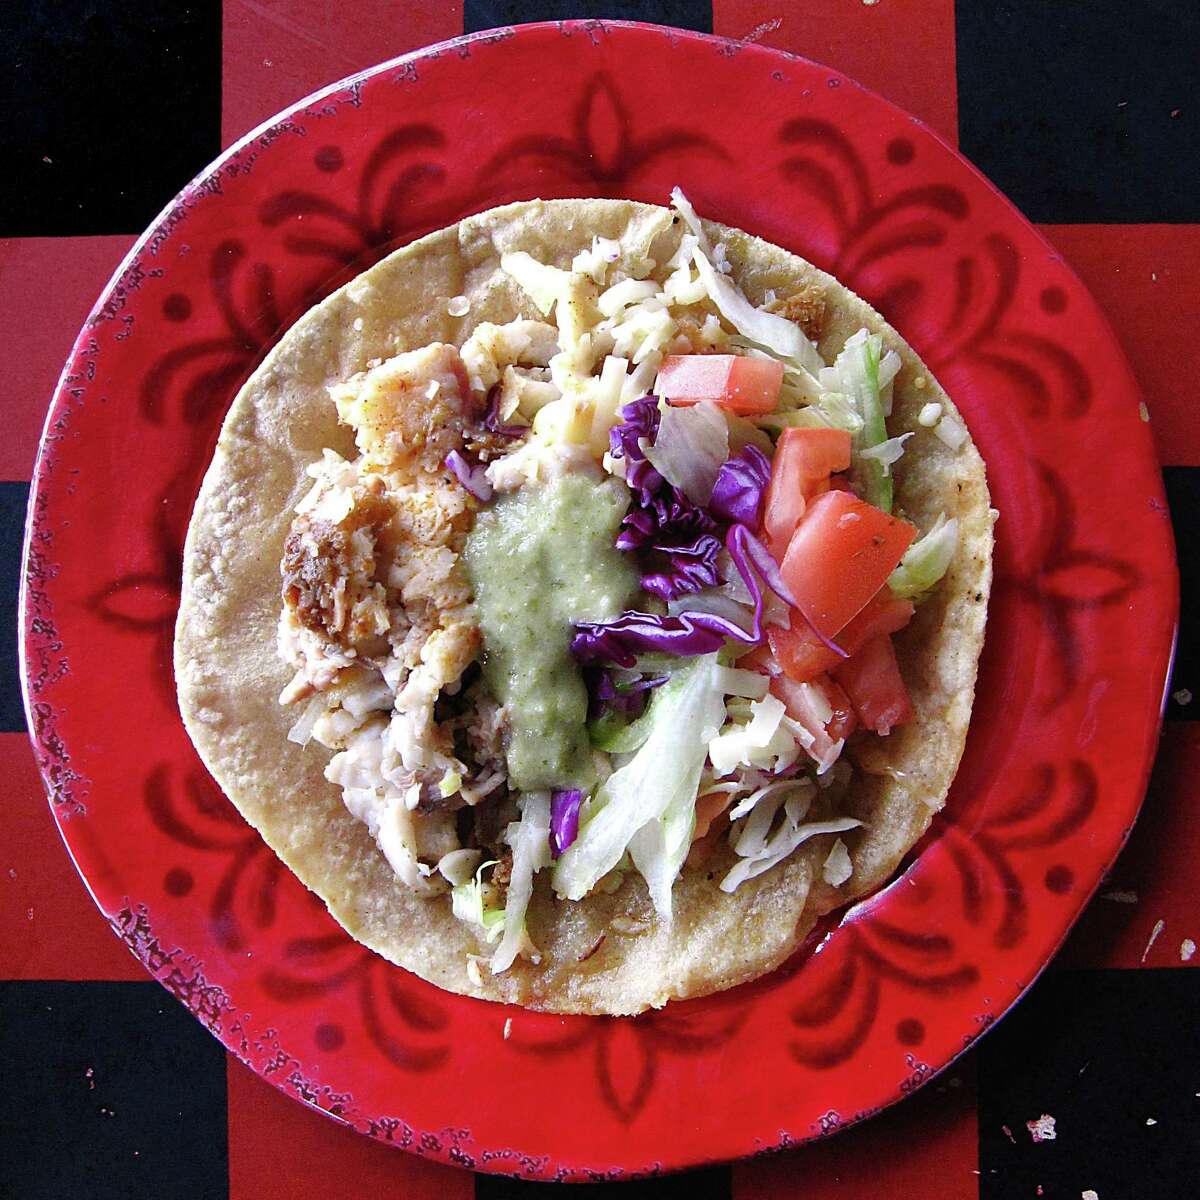 Fish taco on a handmade corn tortilla from Lee's El Taco Garage